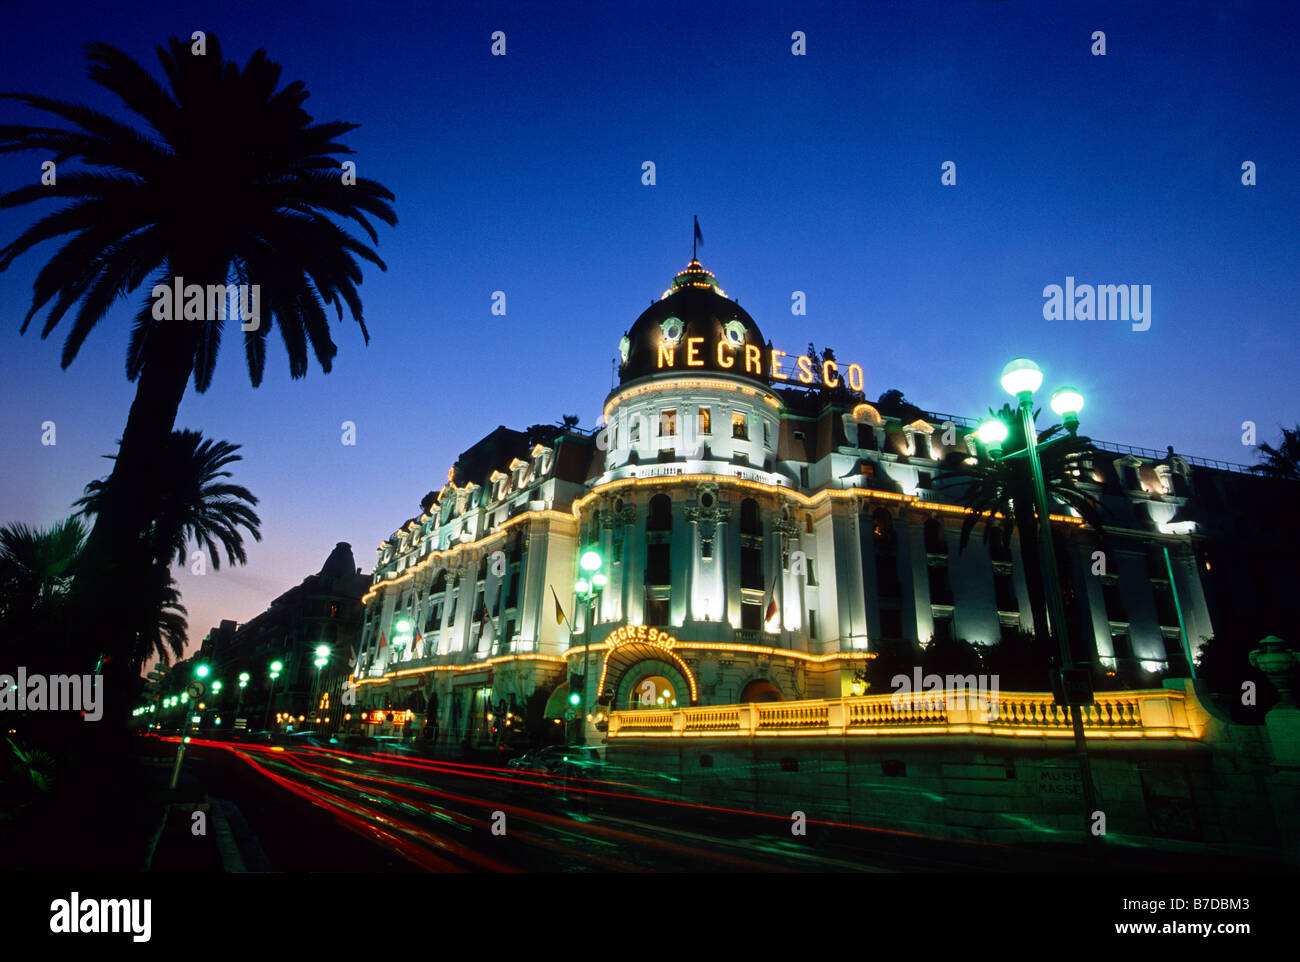 The Negresco Palace hotel lit at night on the Promenade des Anglais Stock Photo